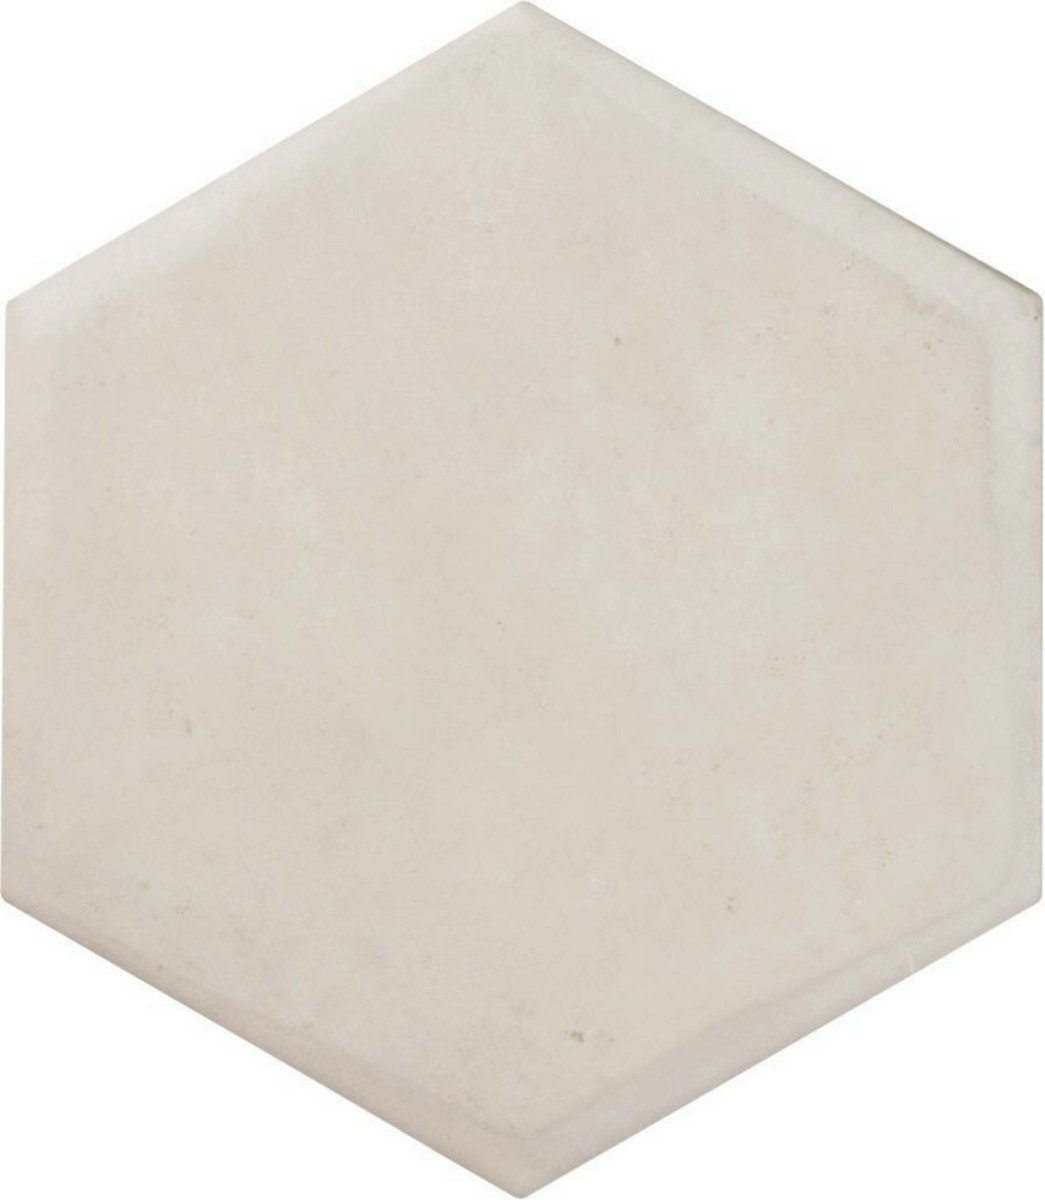 TEMPO - Carrelage Hexagonal sol mur Effet béton cinder 14X16 - Réf. 211101